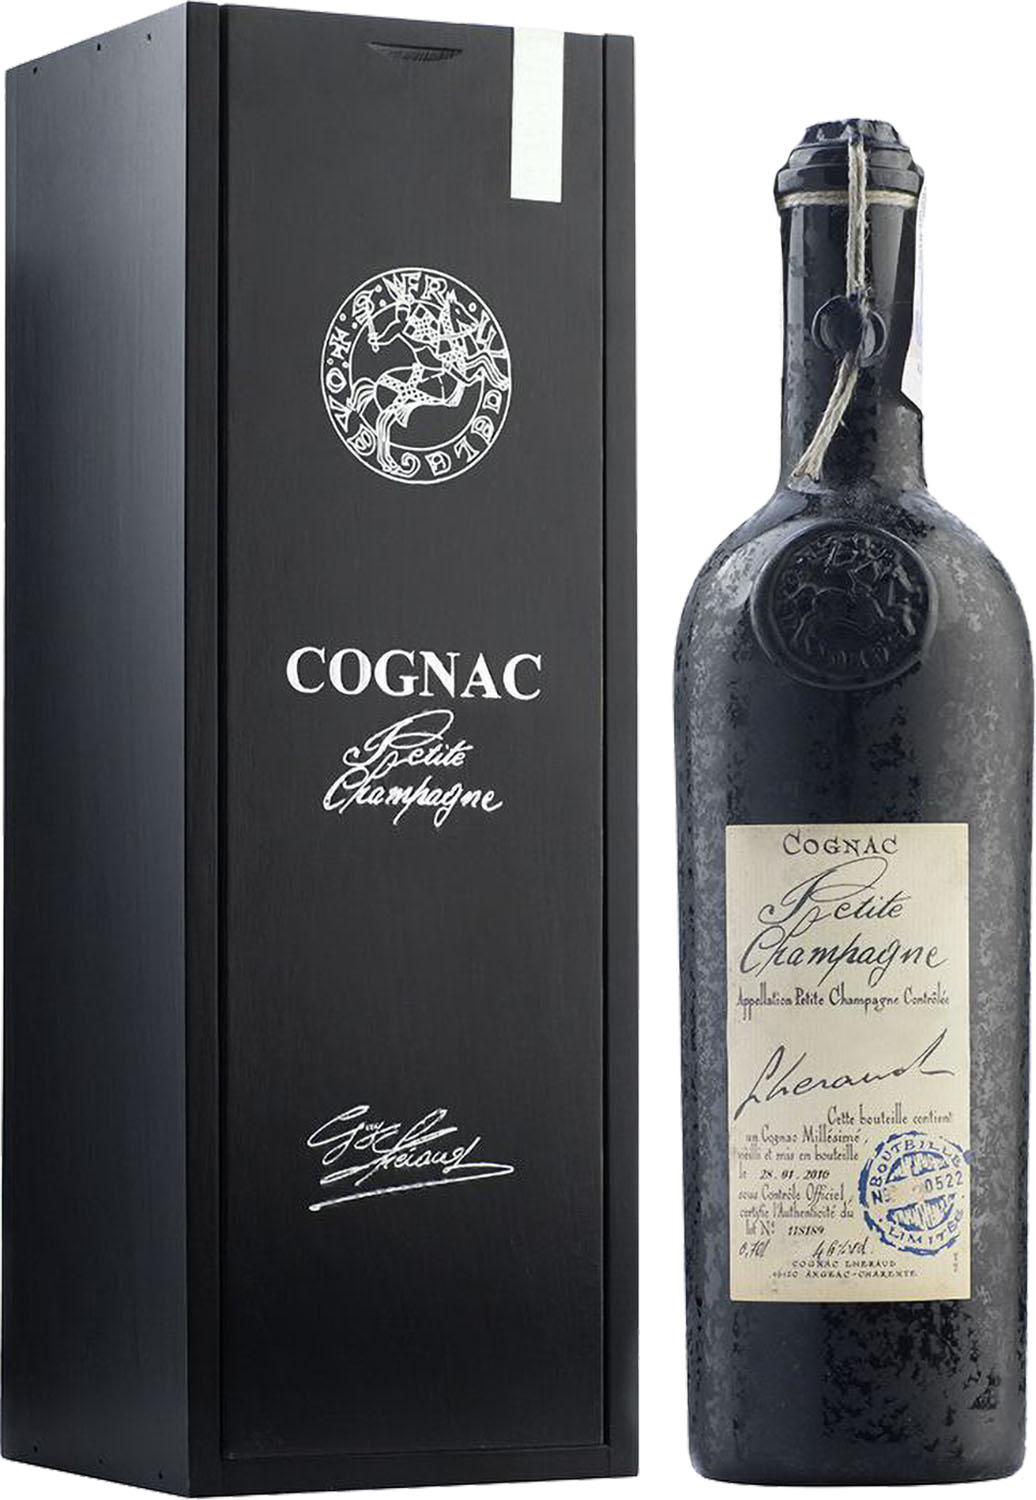 Petite Champagne Lheraud Cognac 1969 - M&P Alkohole i Wina Świata